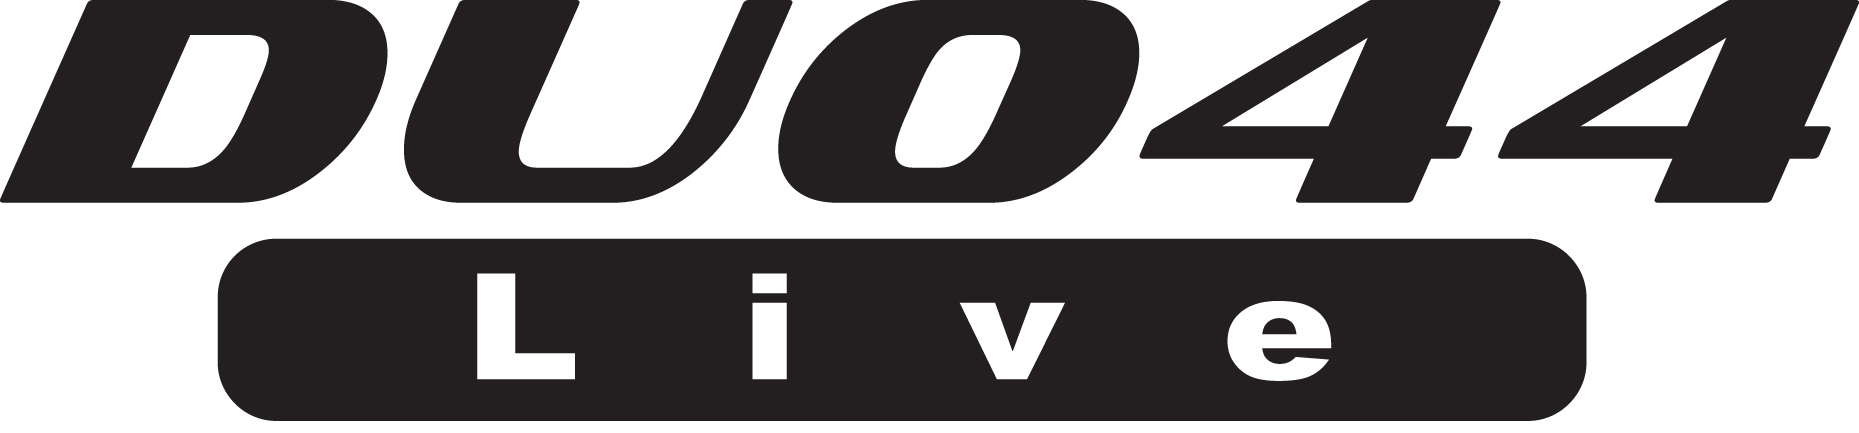 Duo44 Live logo